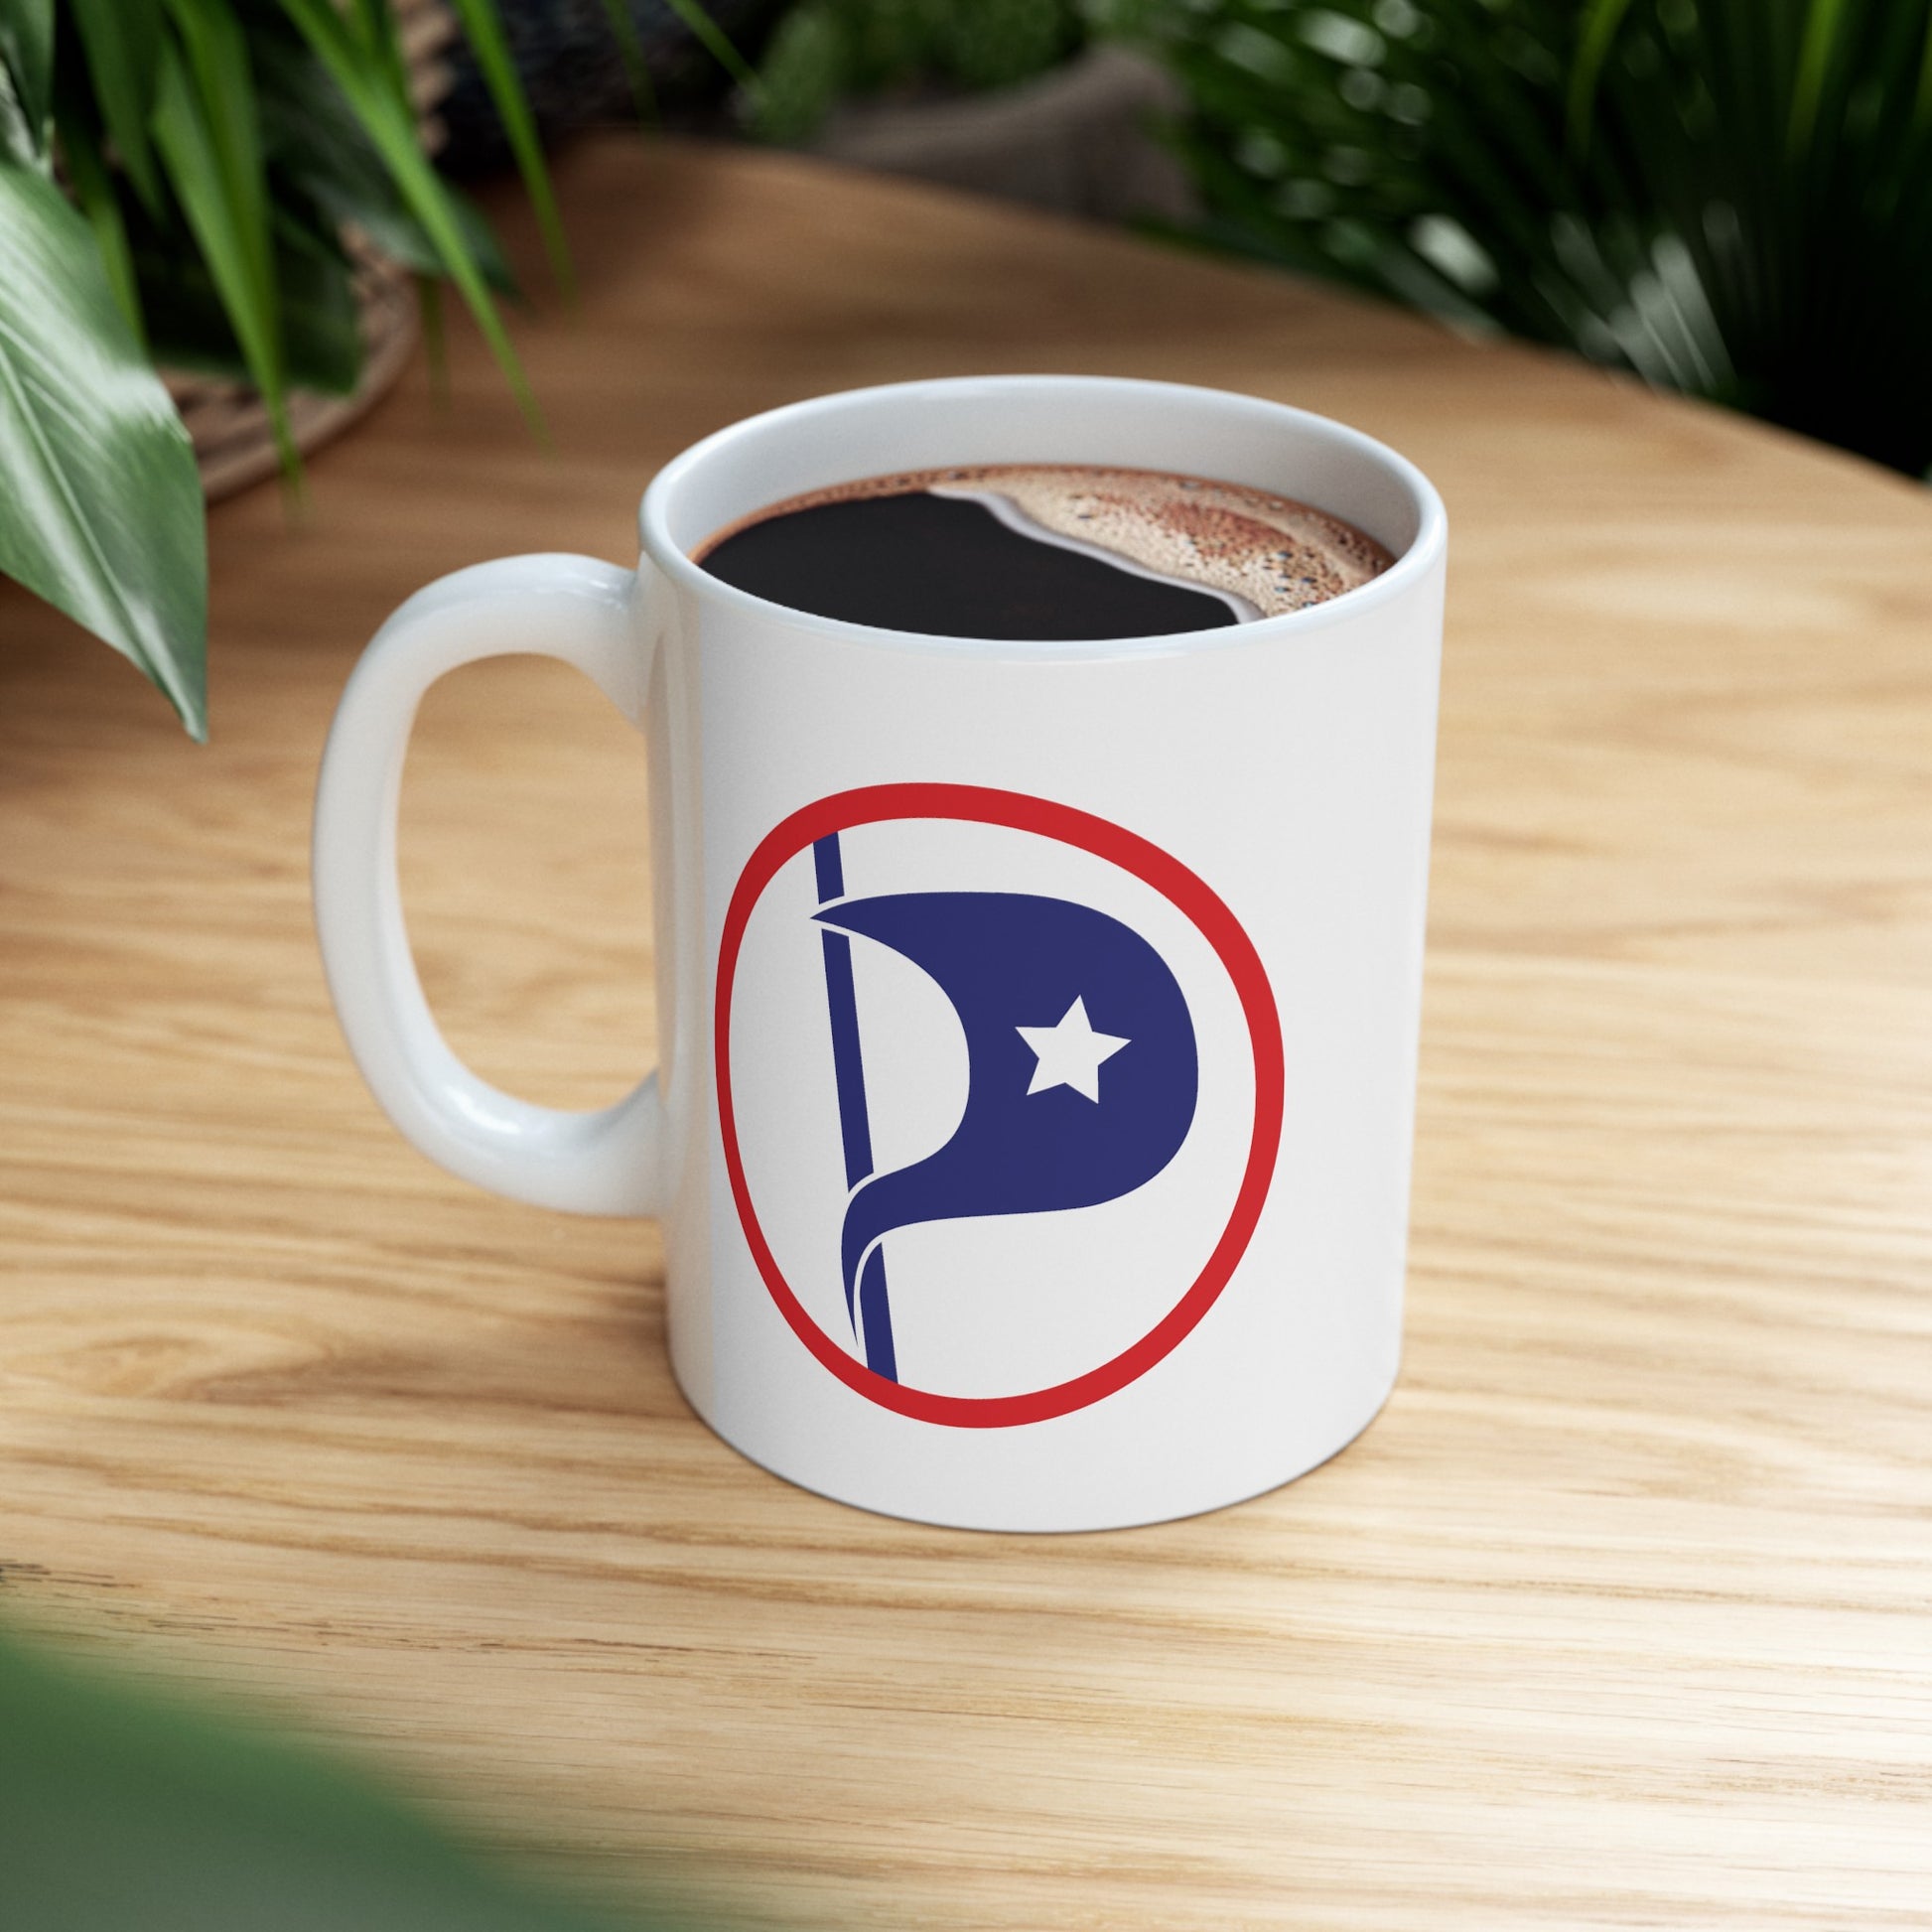 US Pirate Party Coffee Mug - Double Sided White Ceramic 11oz by TheGlassyLass.com